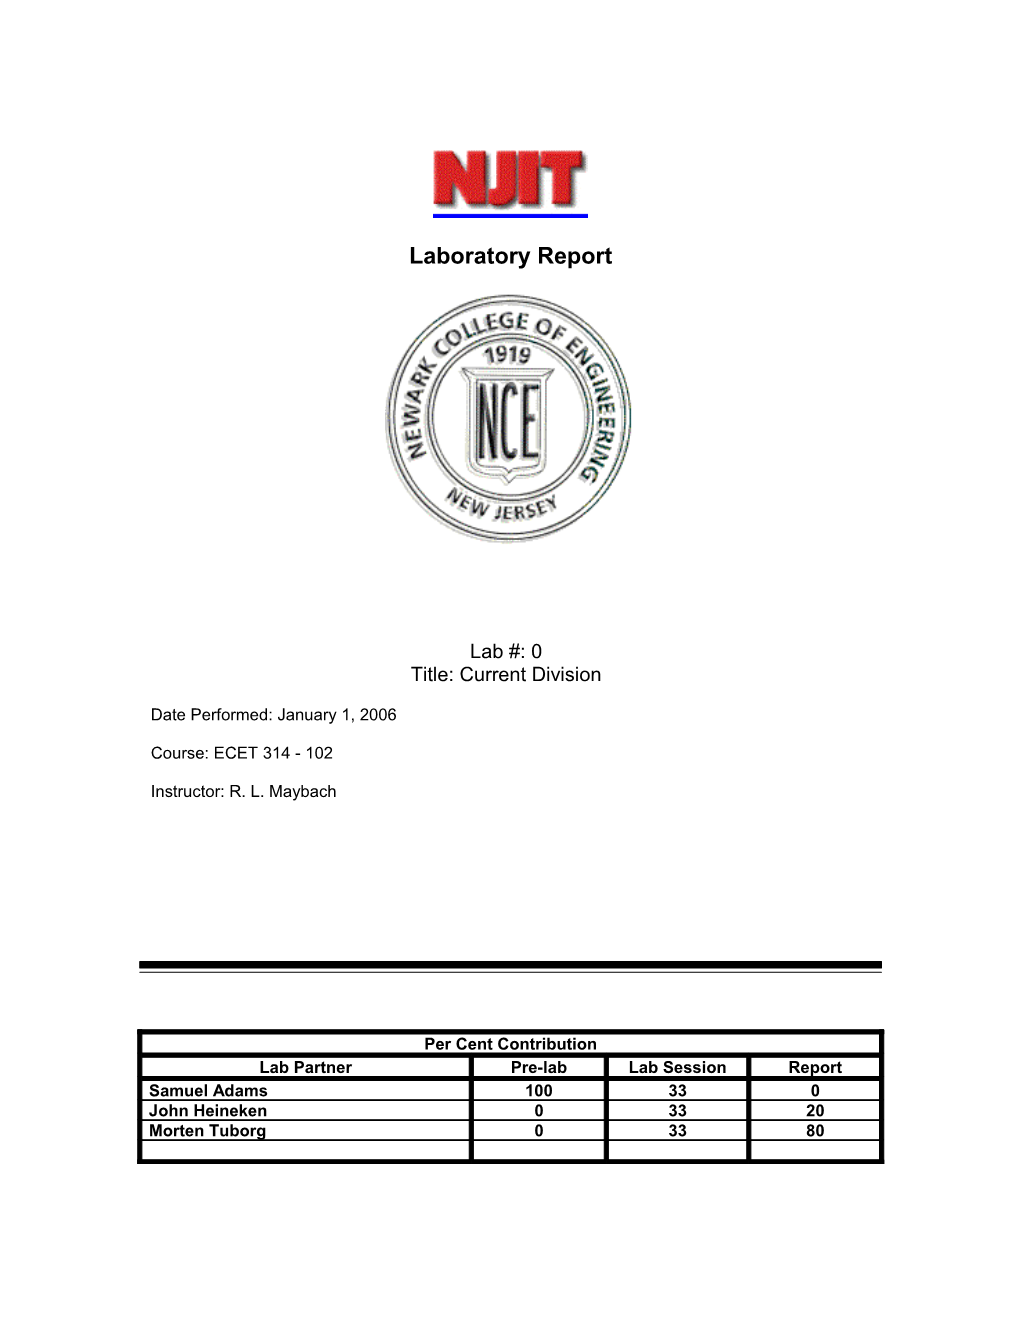 NJIT Lab Report Template